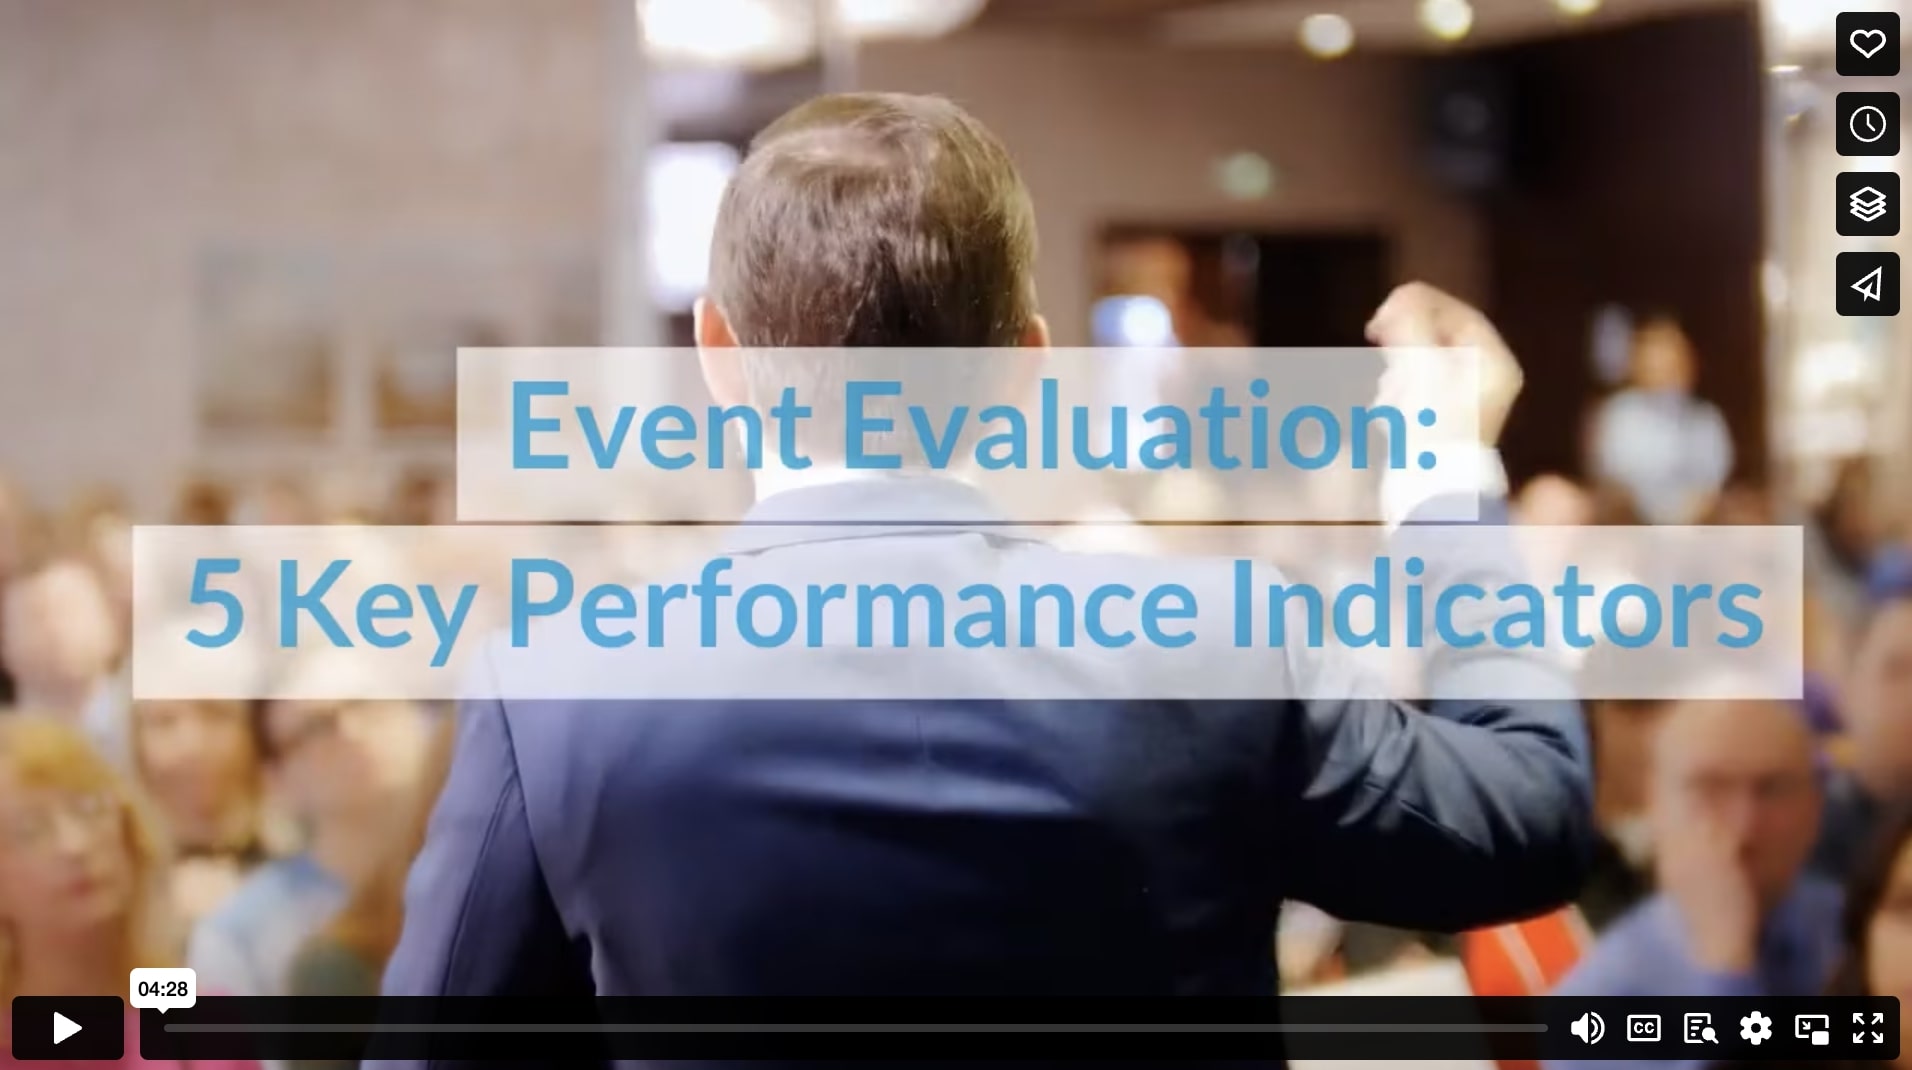 Event Evaluation: 5 Key Performance Indicators